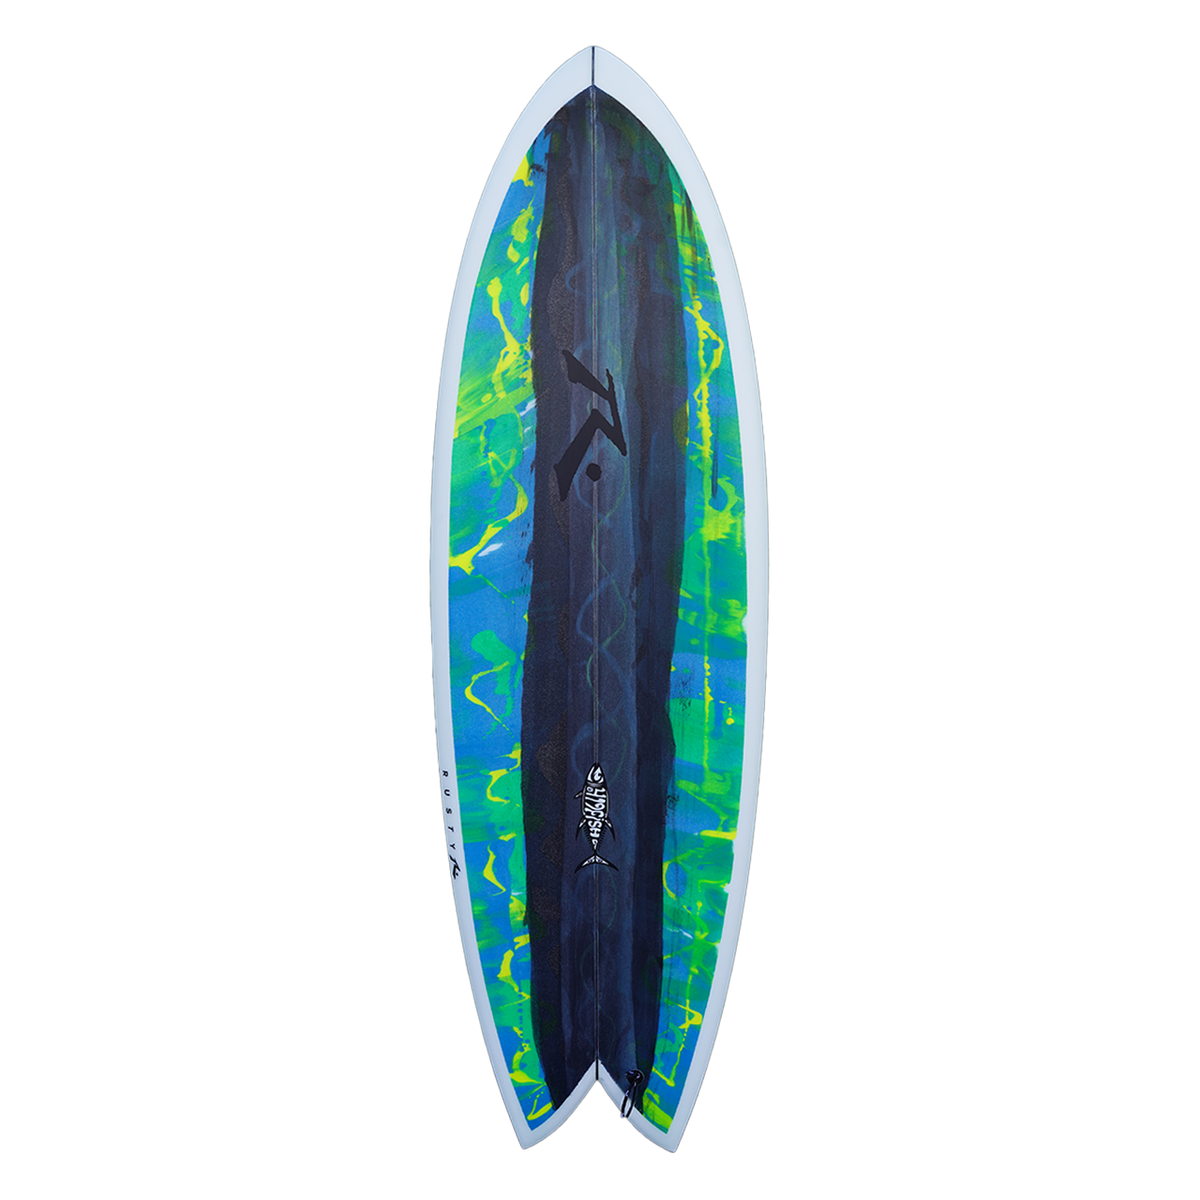 419fish - Alternative - Rusty Surfboards - Top View - Dark Blue Swirl